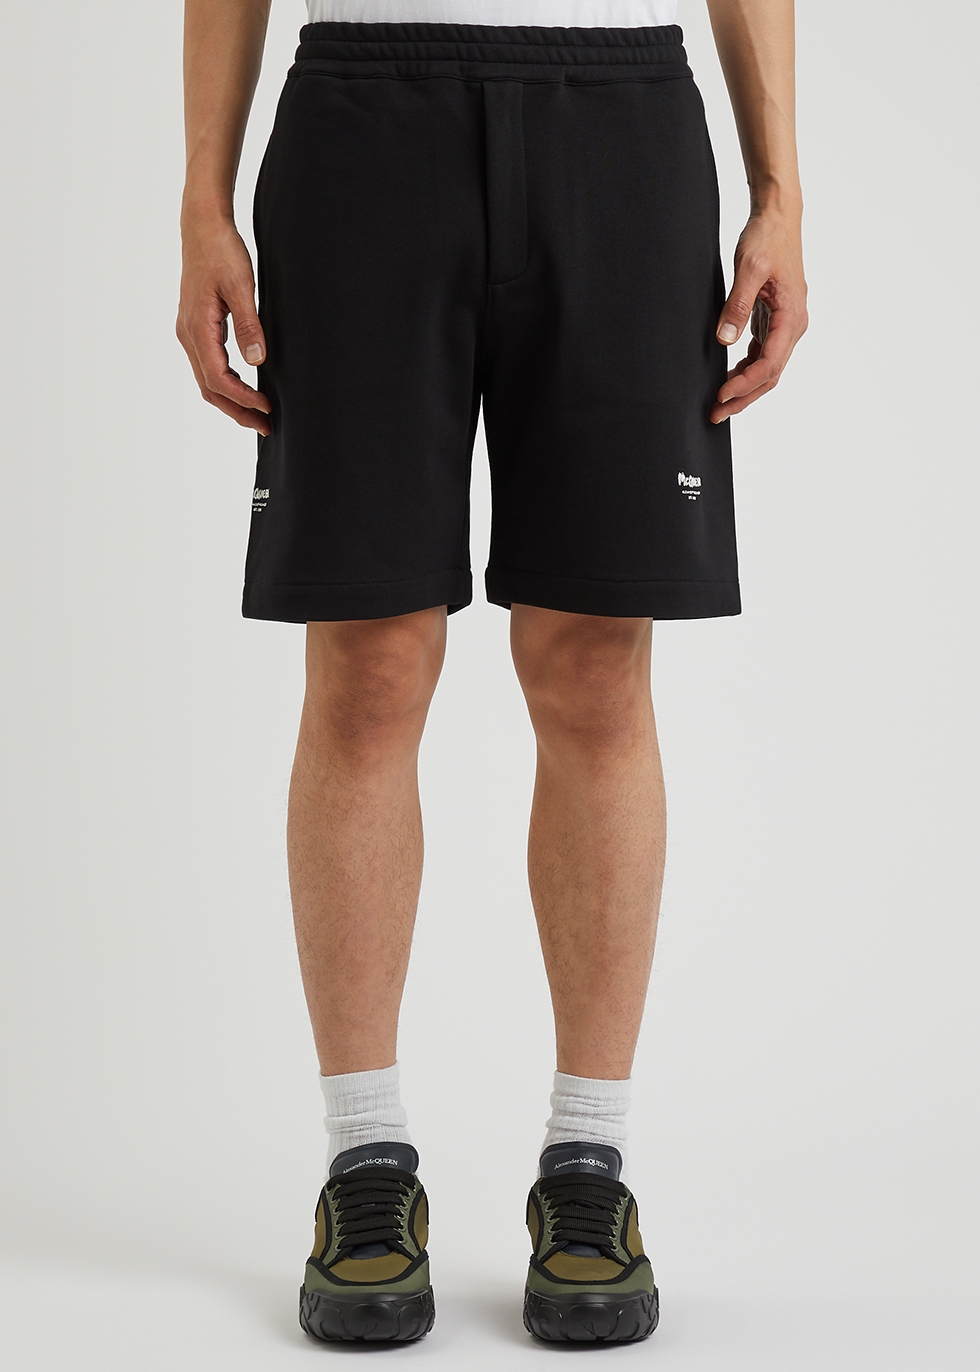 Alexander McQueen Black logo cotton shorts - Harvey Nichols